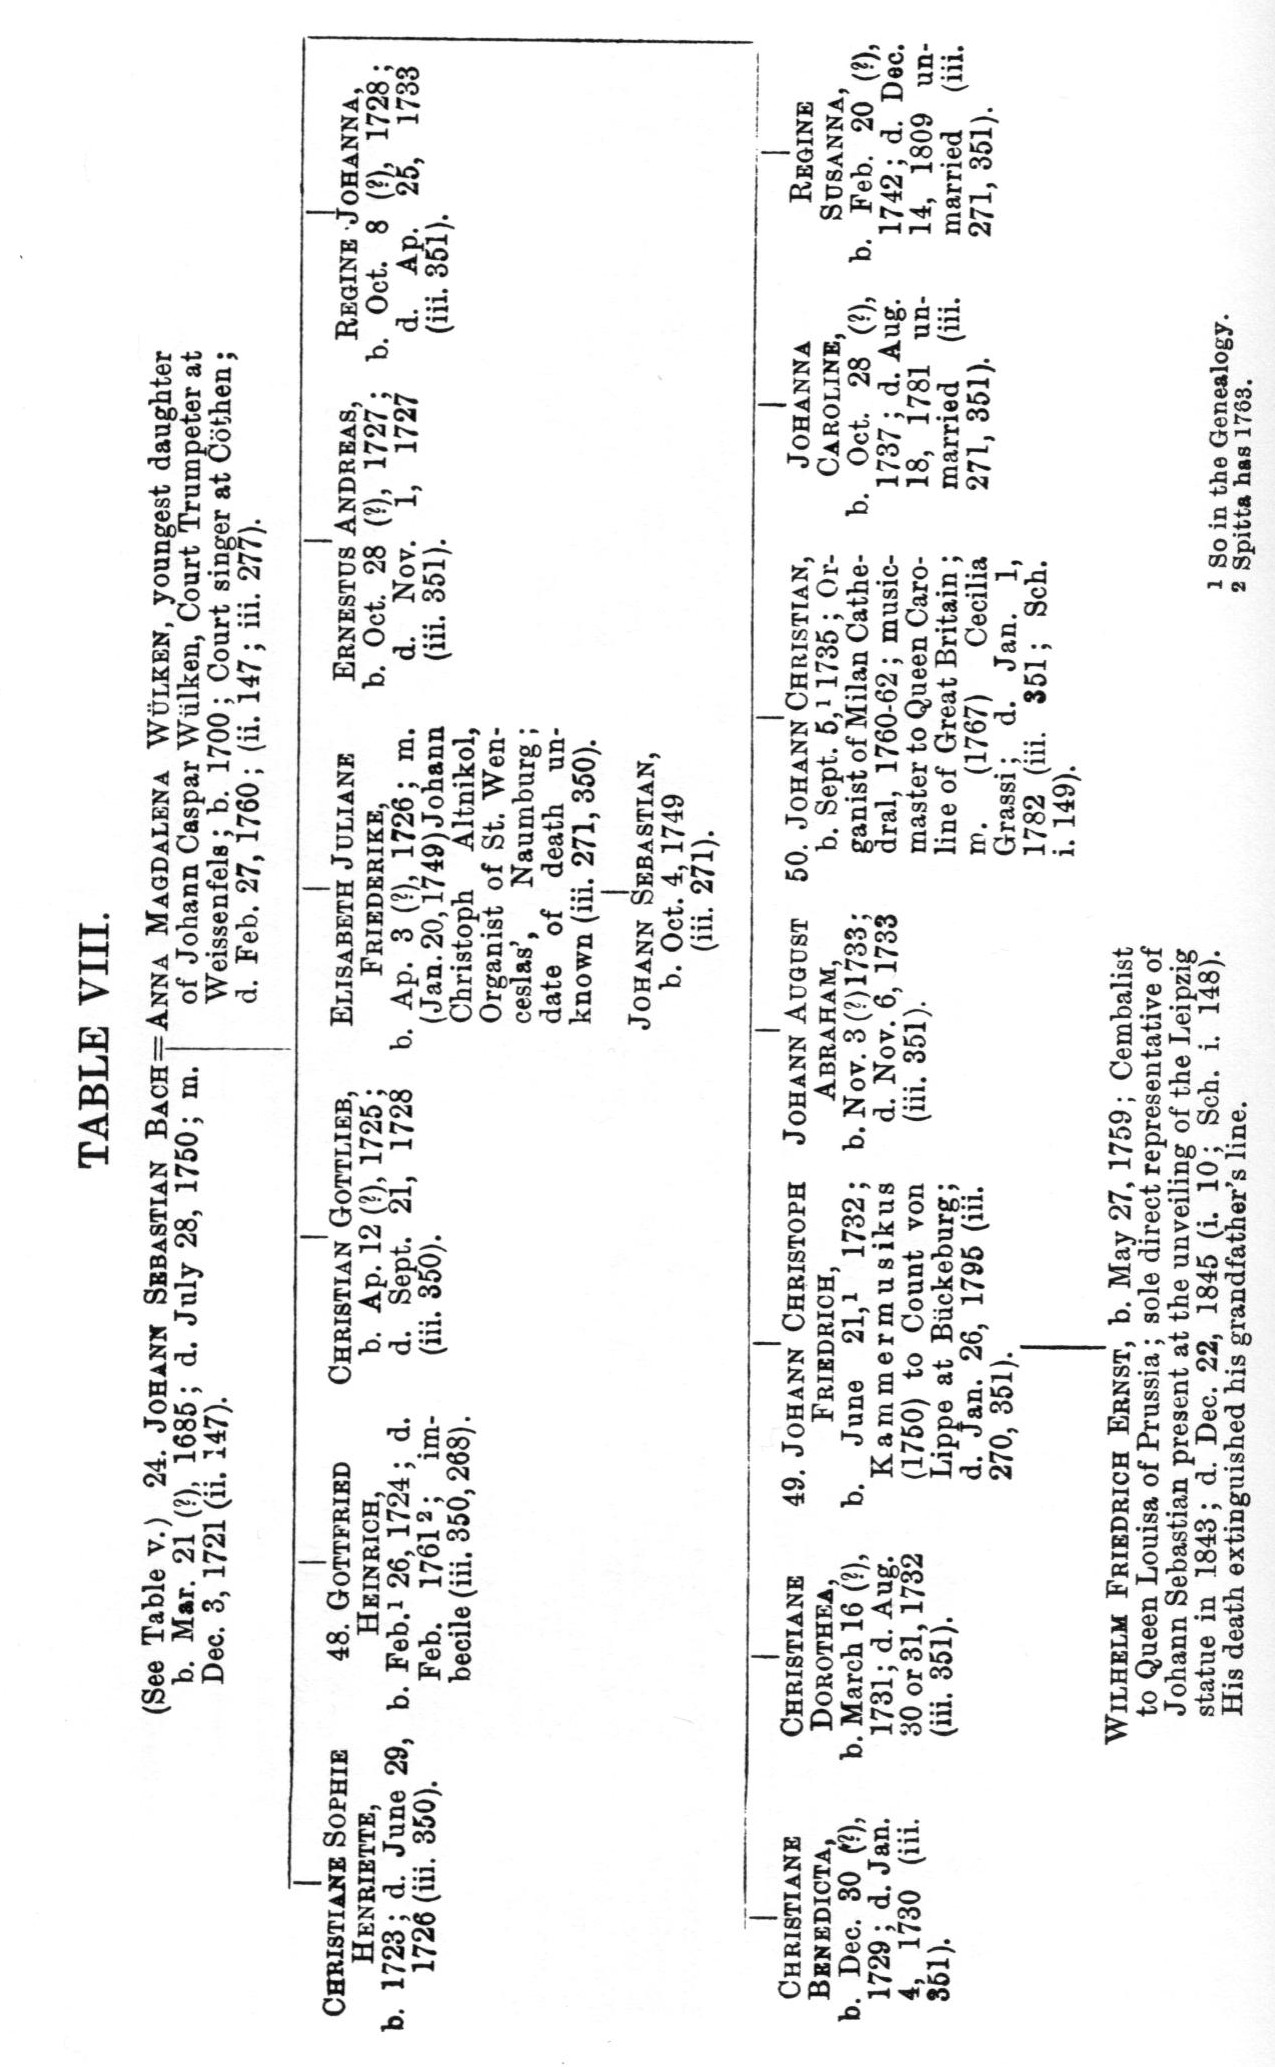 Genealogy Table, p. 310